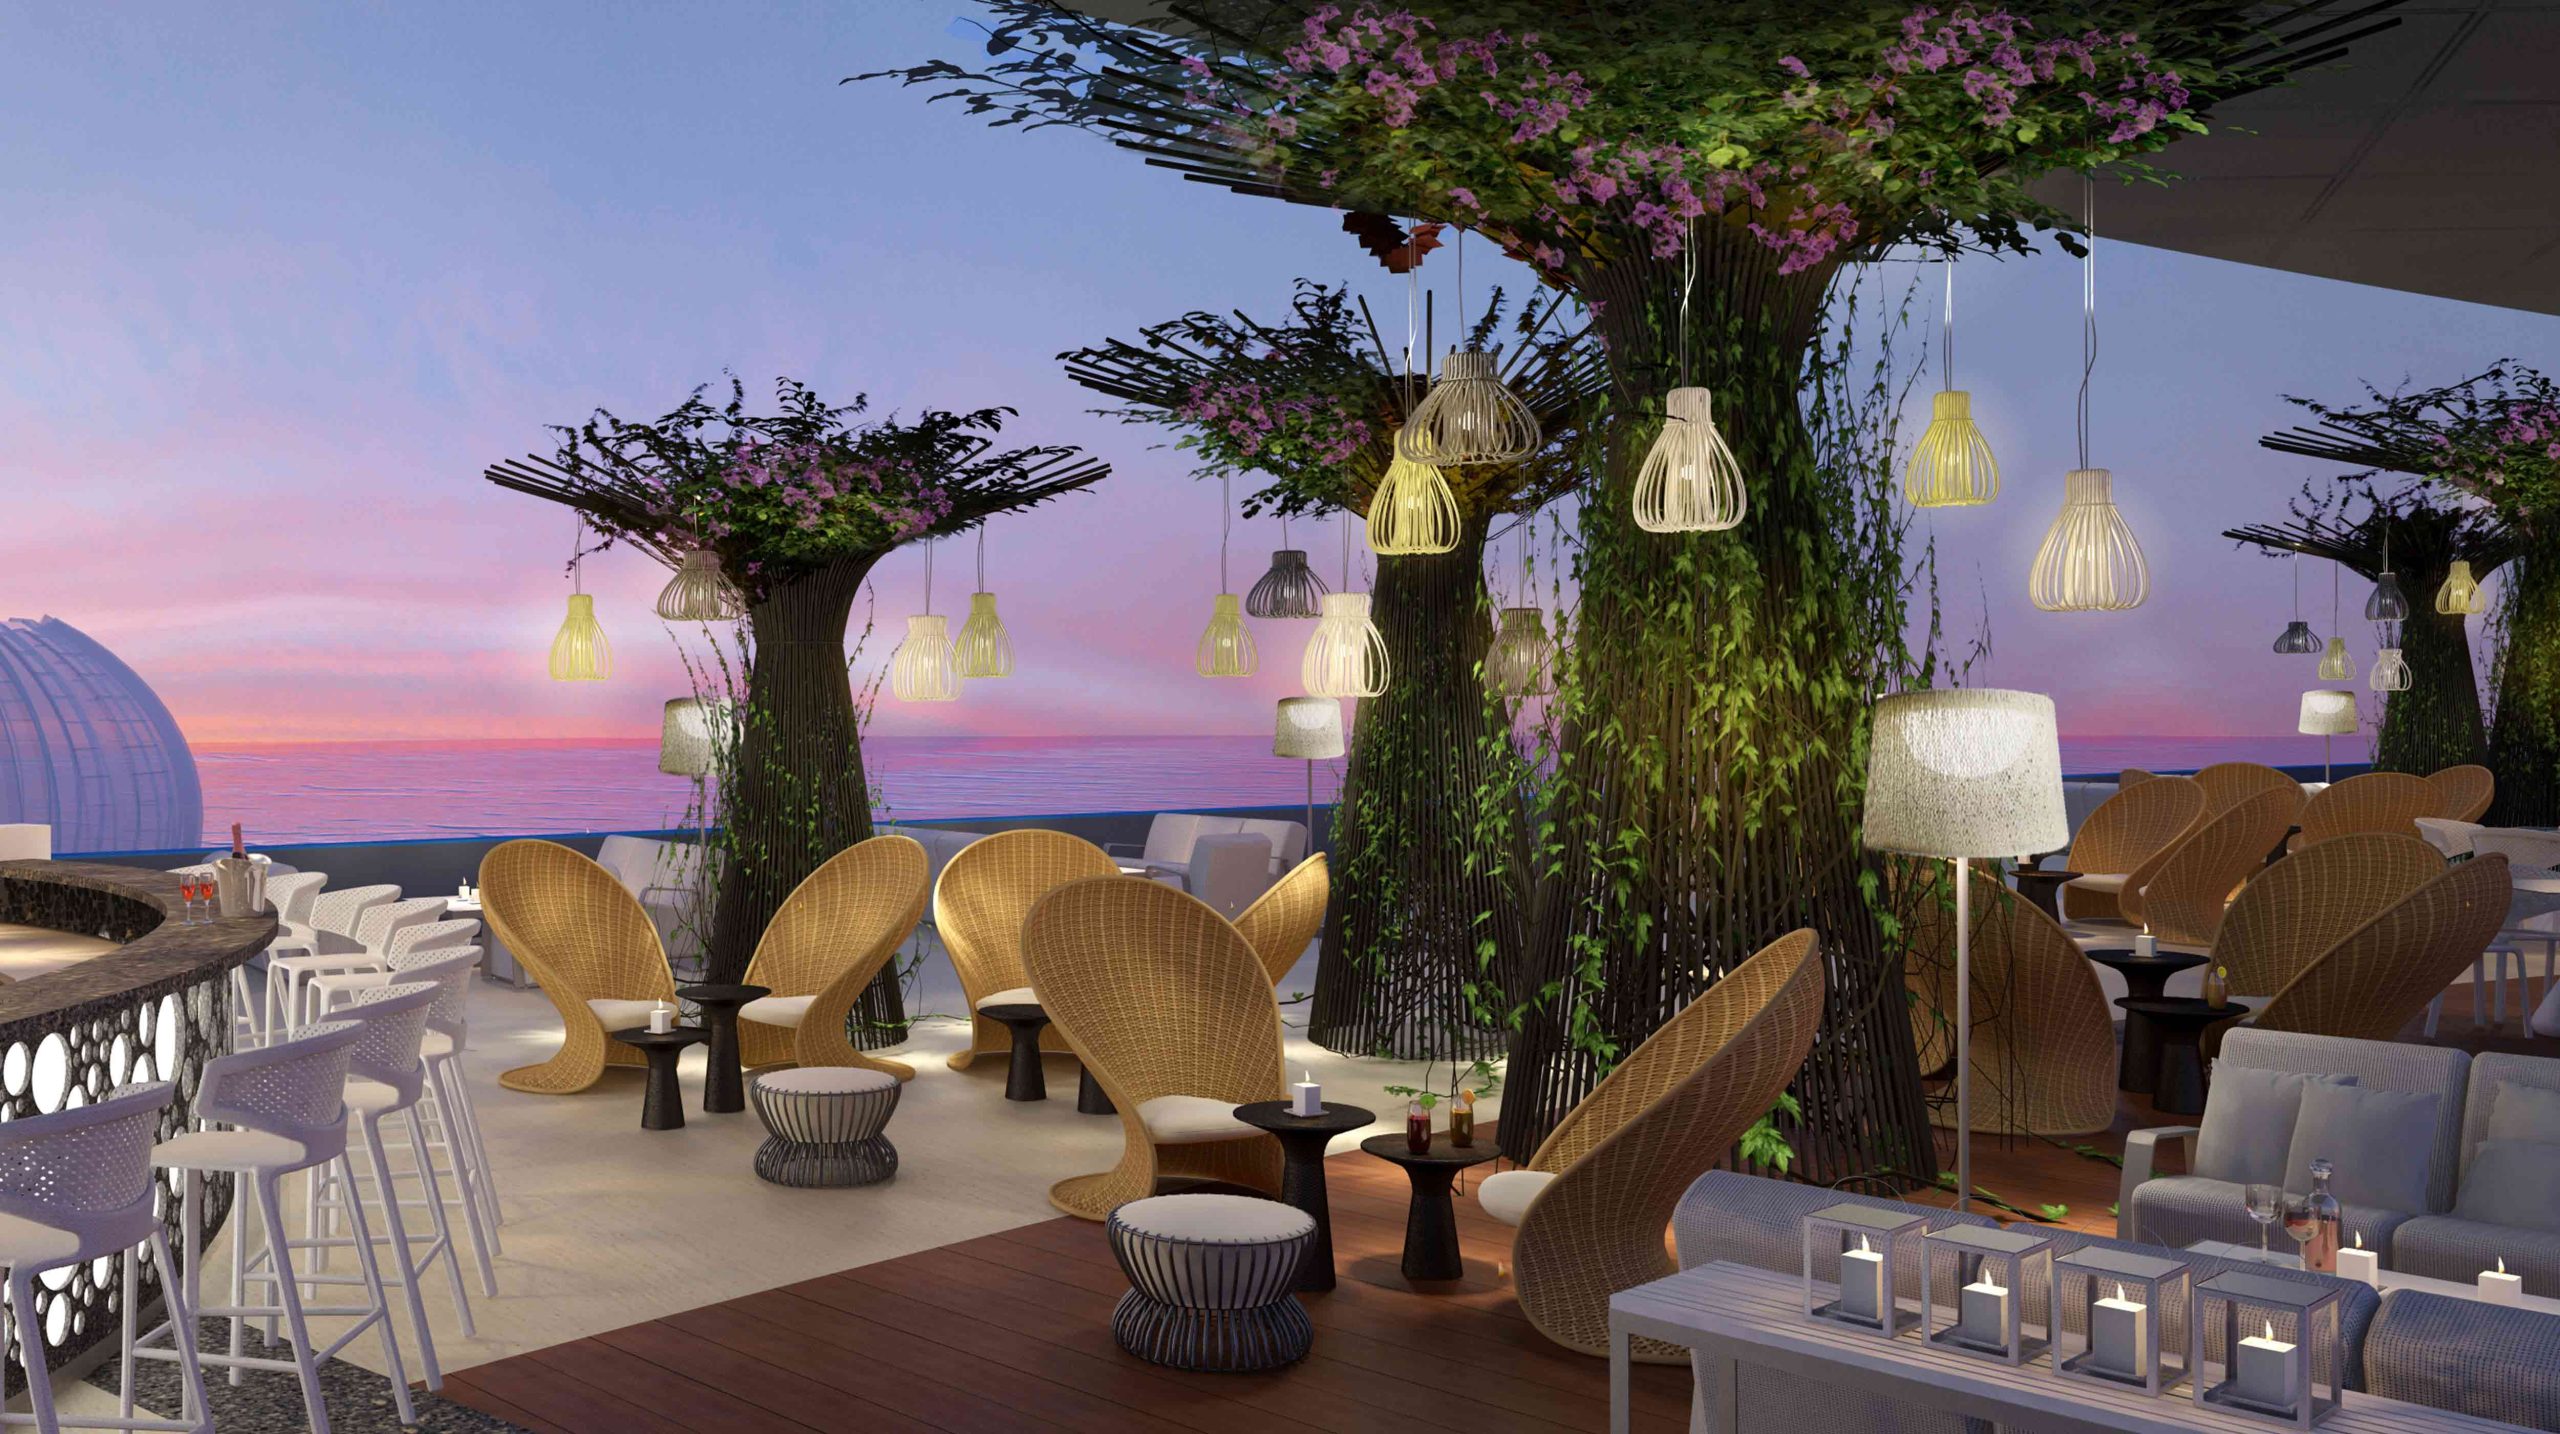 Diner Amical at the Pearl Lounge Terrace, Grand Hyatt Abu Dhabi